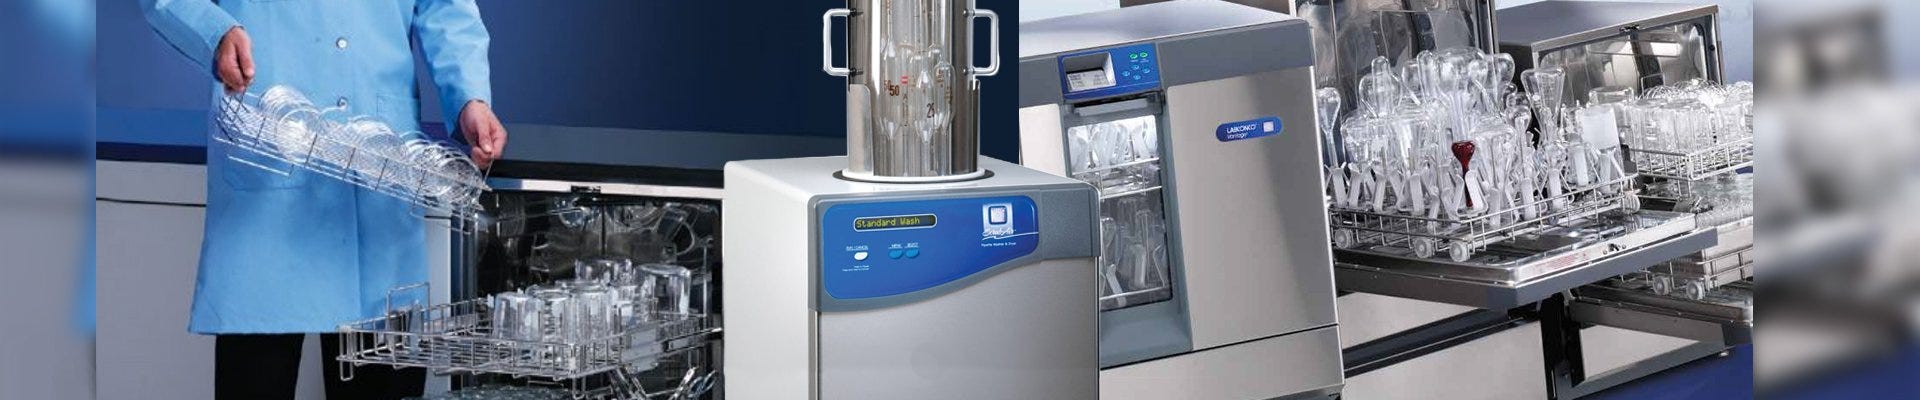 https://www.laboratory-equipment.com/media/asset-library/l/a/labware-flask-washers-banner.jpg